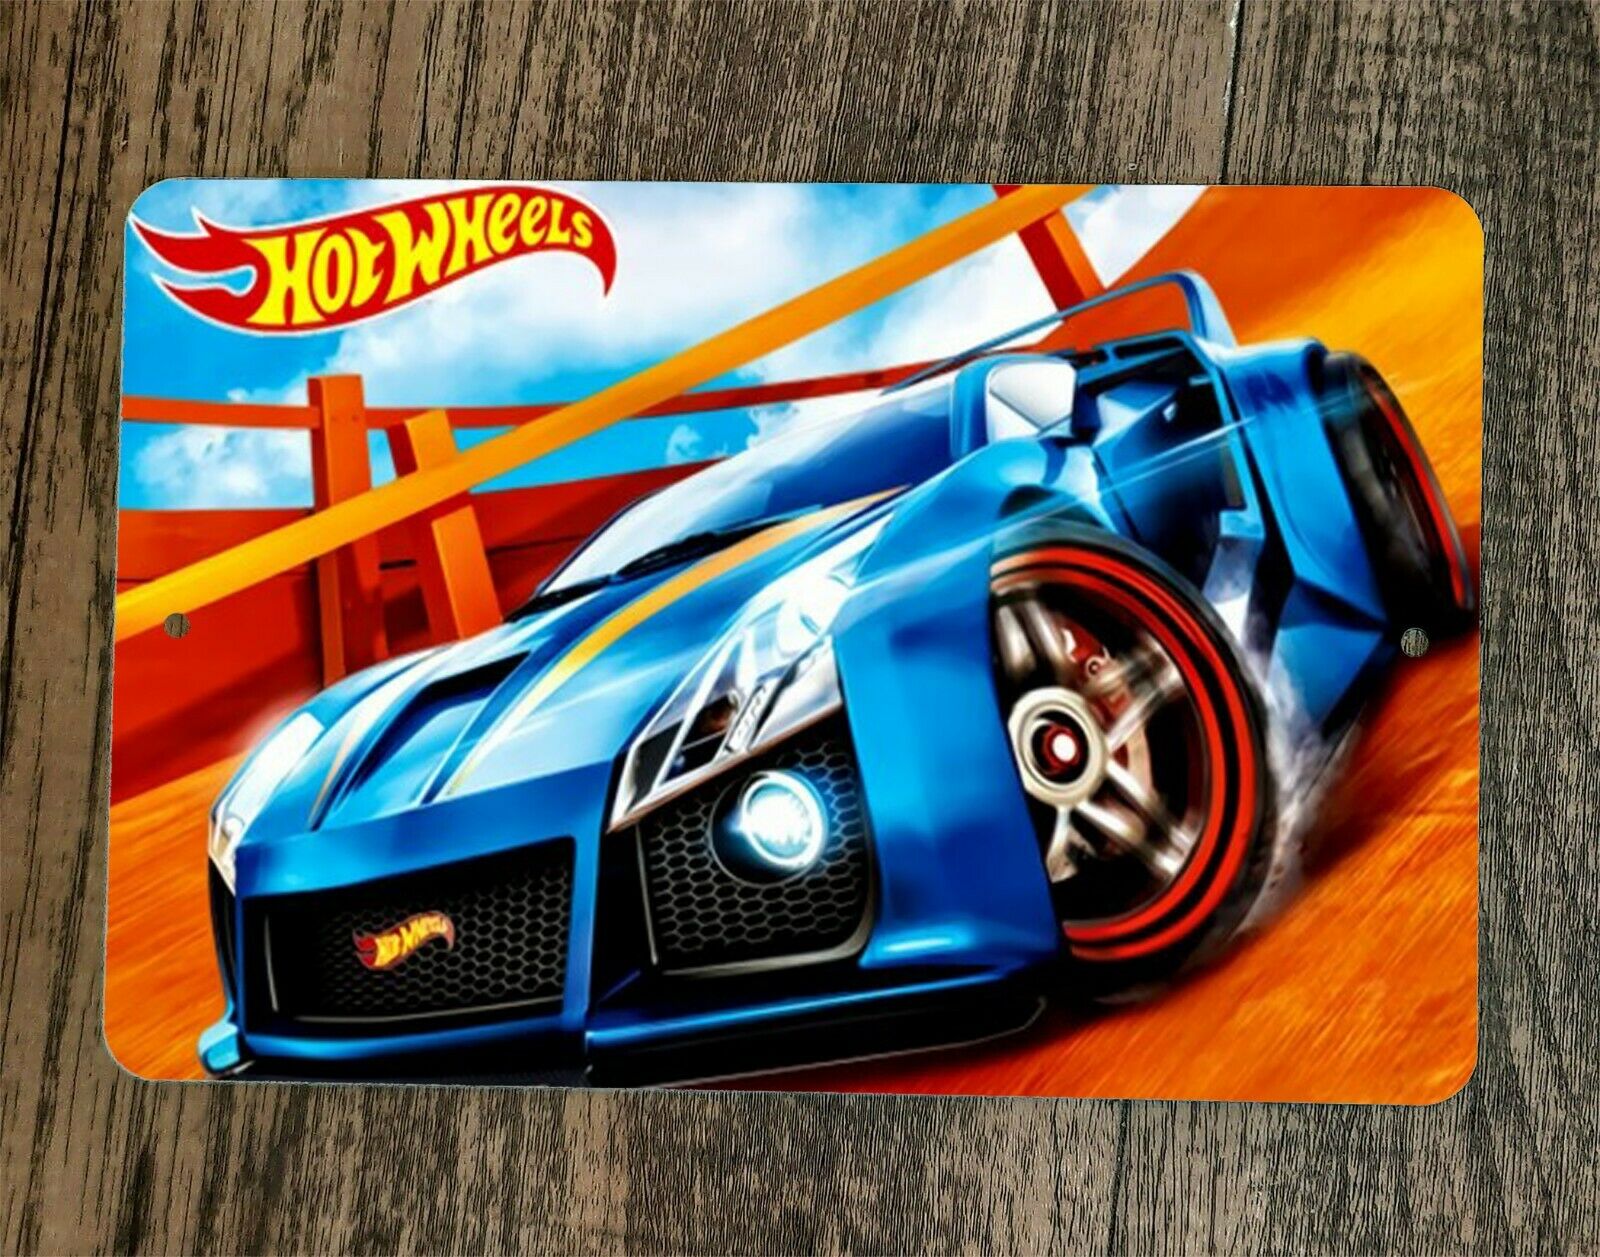 Hot Wheels Cool Car Poster Art 8x12 Metal Wall Car Sign Garage Poster